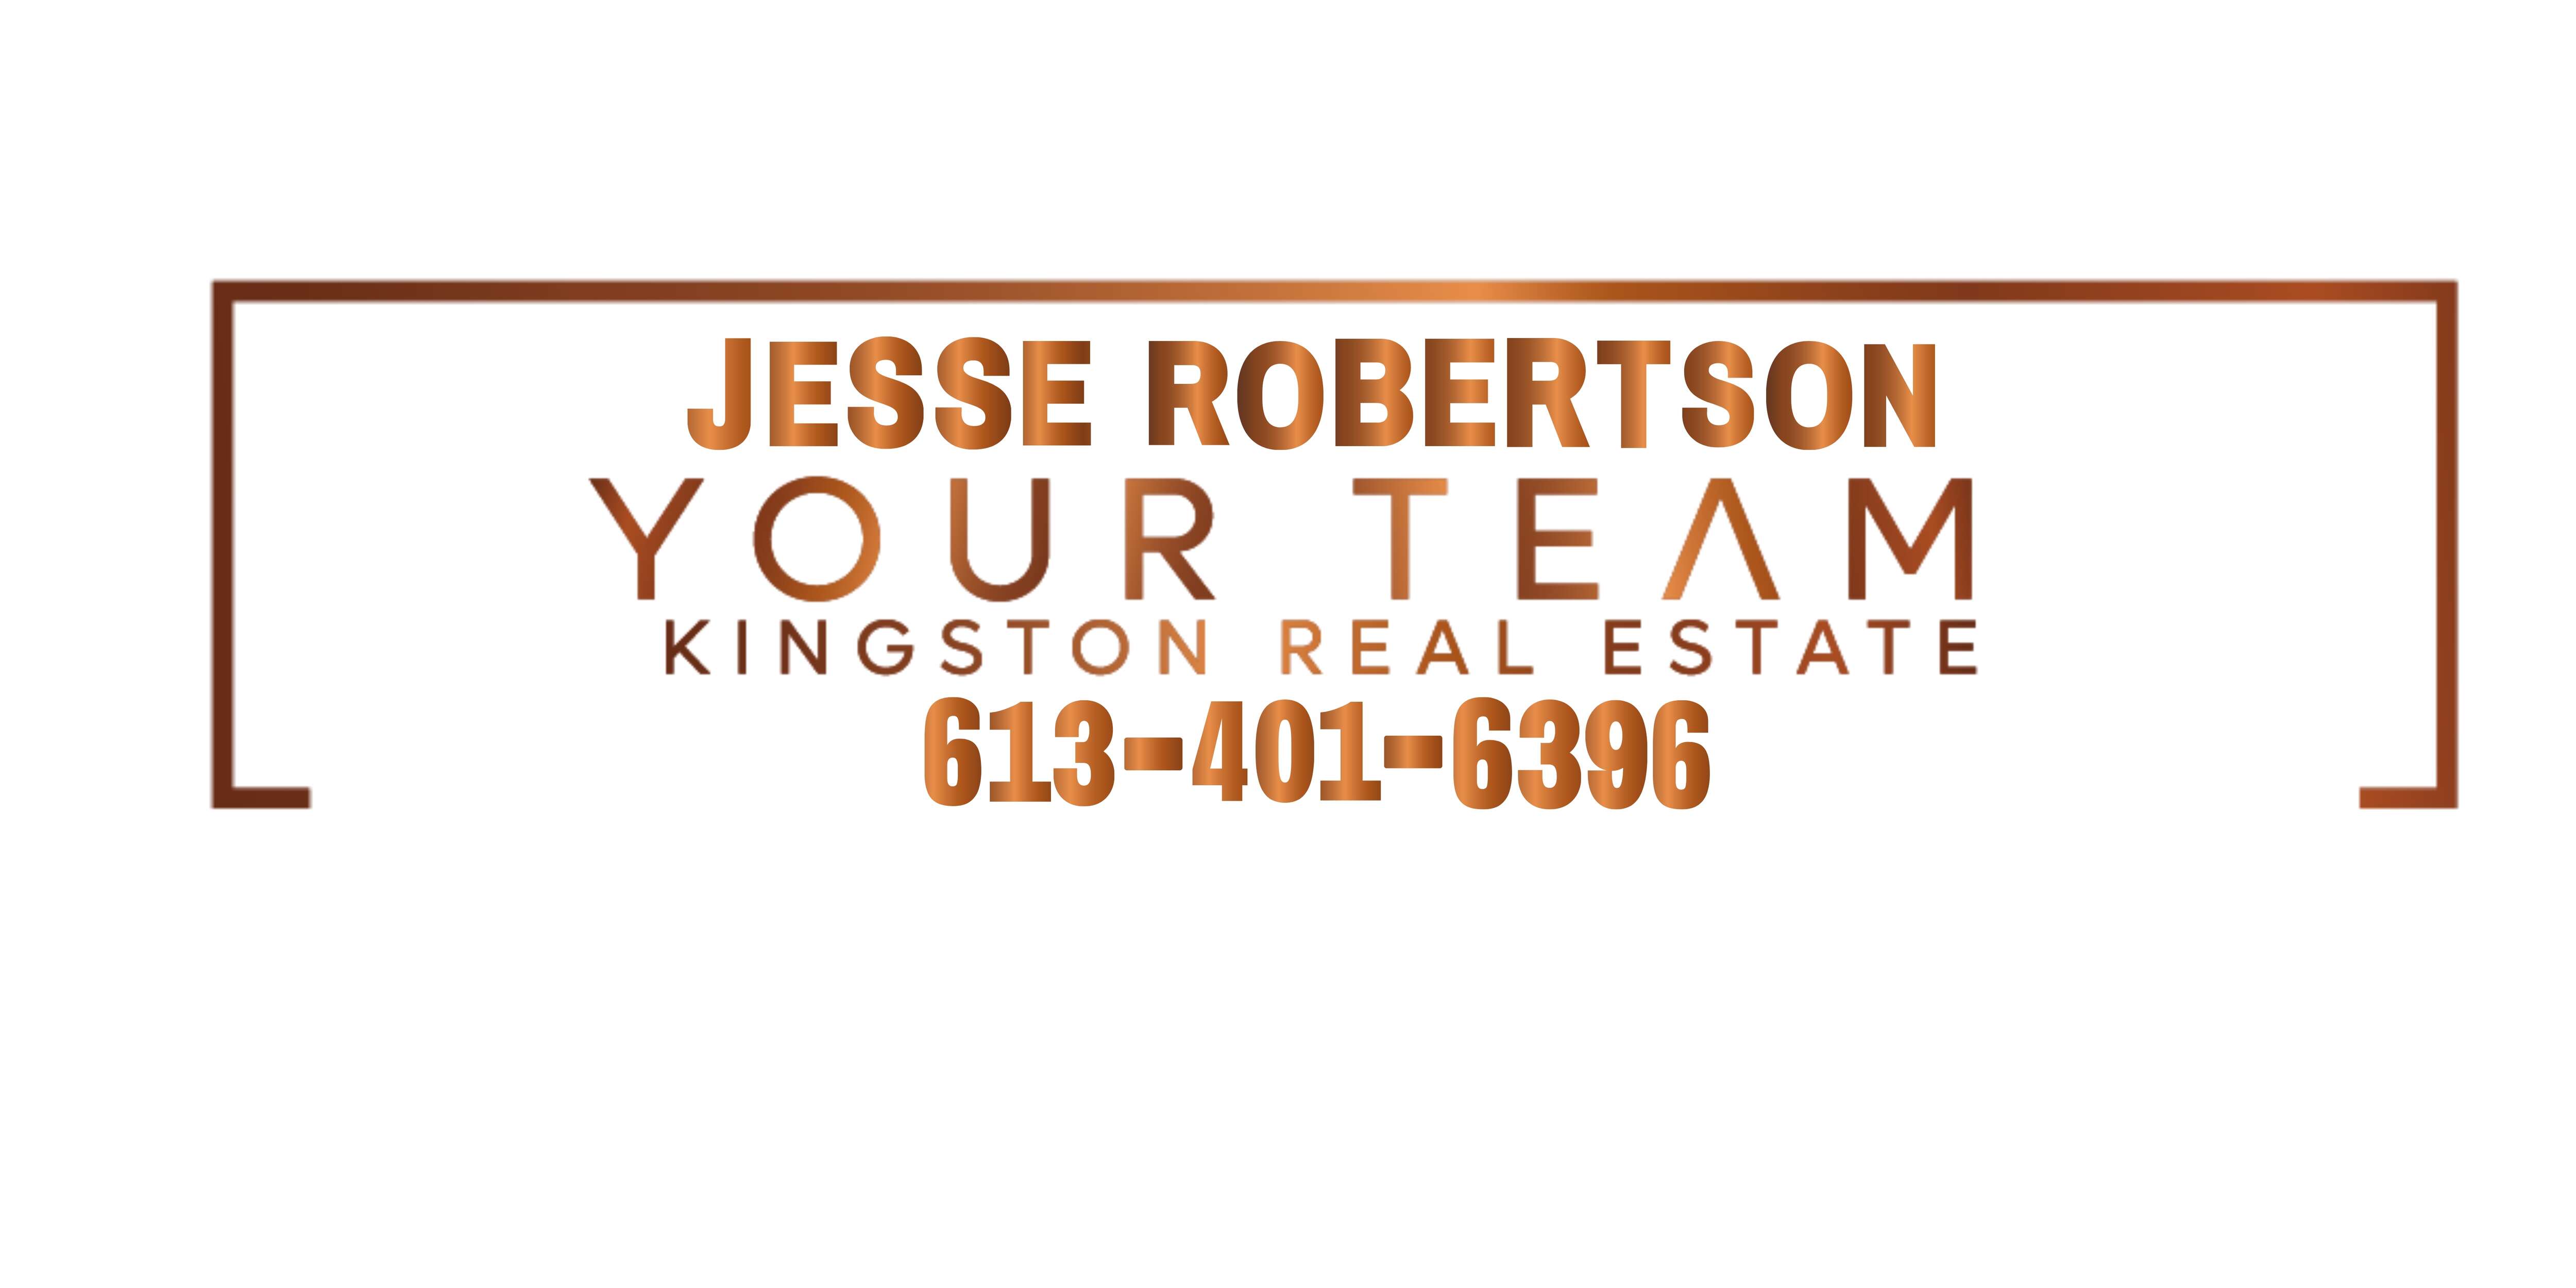 Your Team Kingston- Jesse Robertson